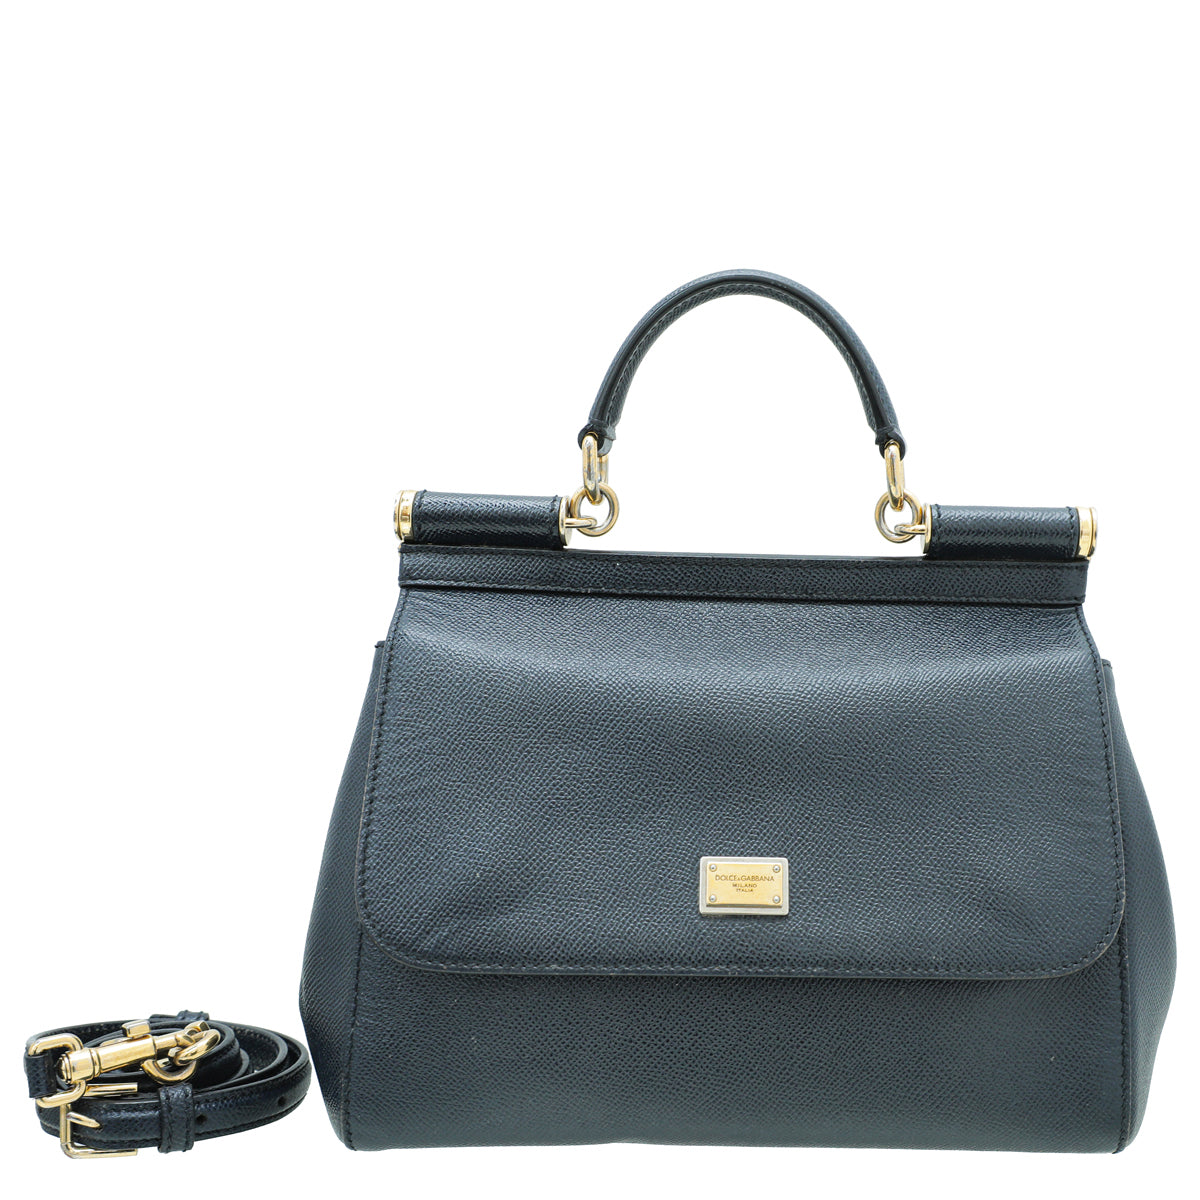 Sicily Medium Leather Shoulder Bag in Neutrals - Dolce Gabbana